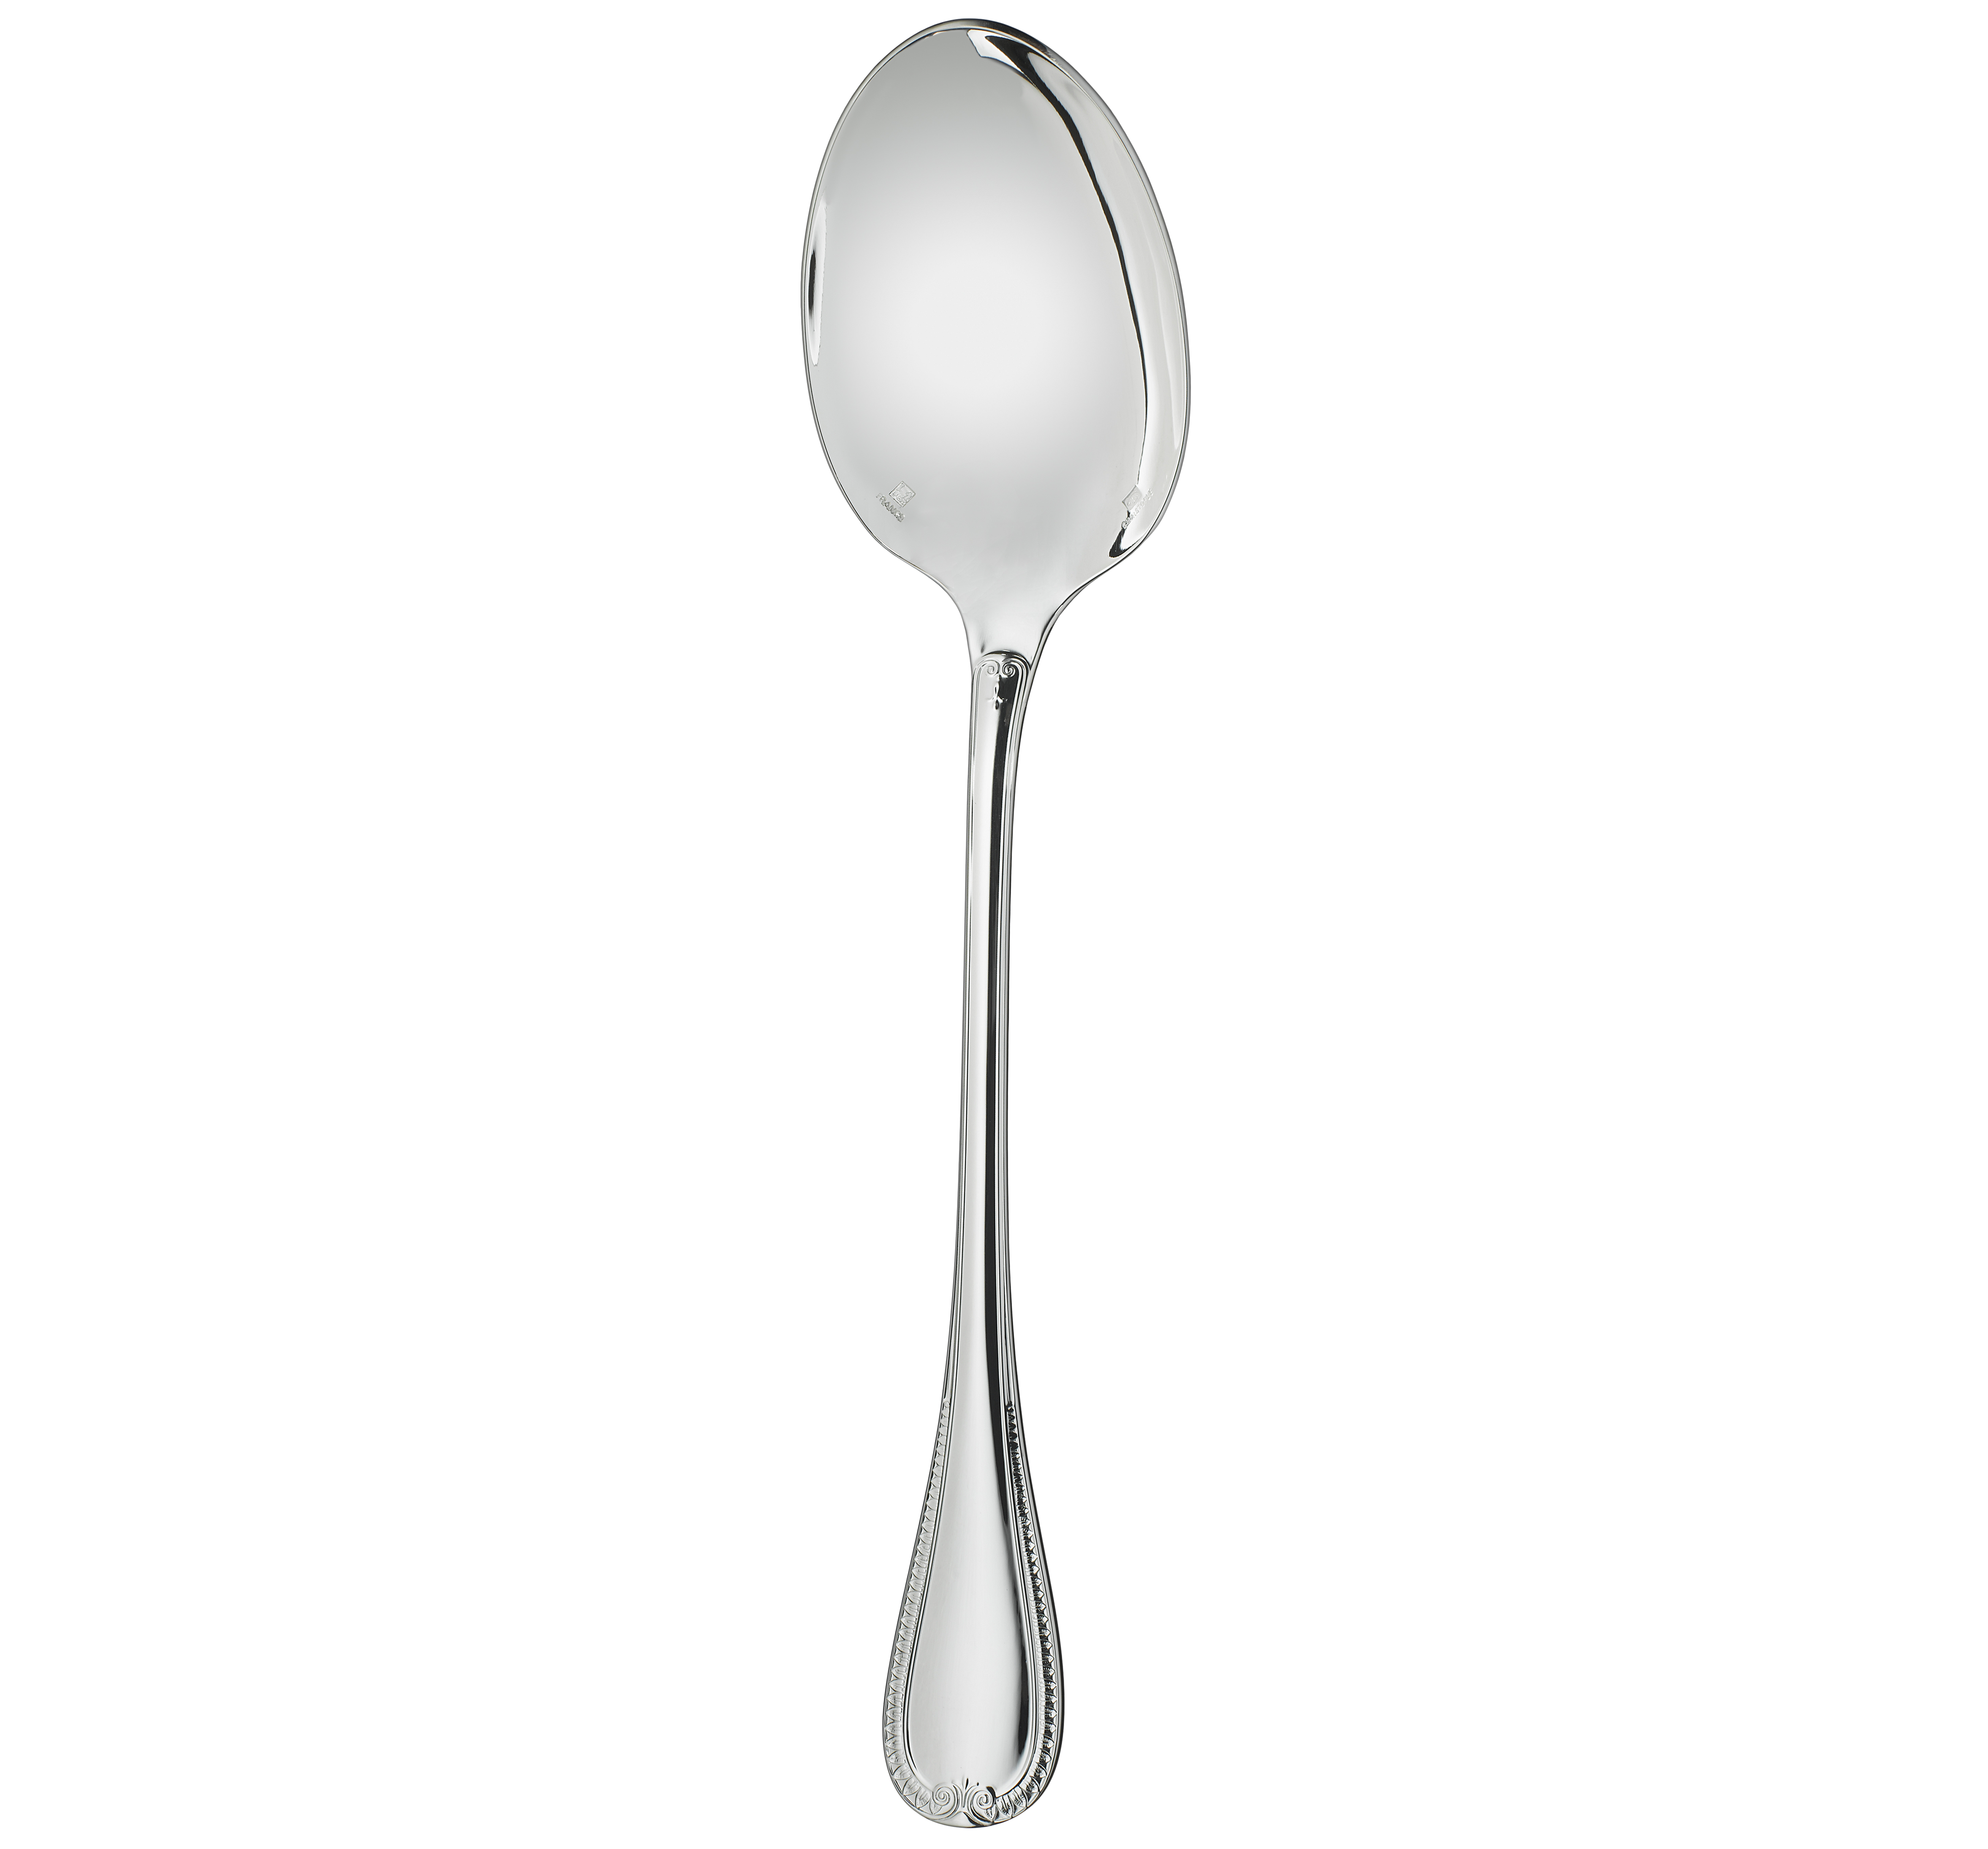 Malmaison Silver-Plated Serving Spoon